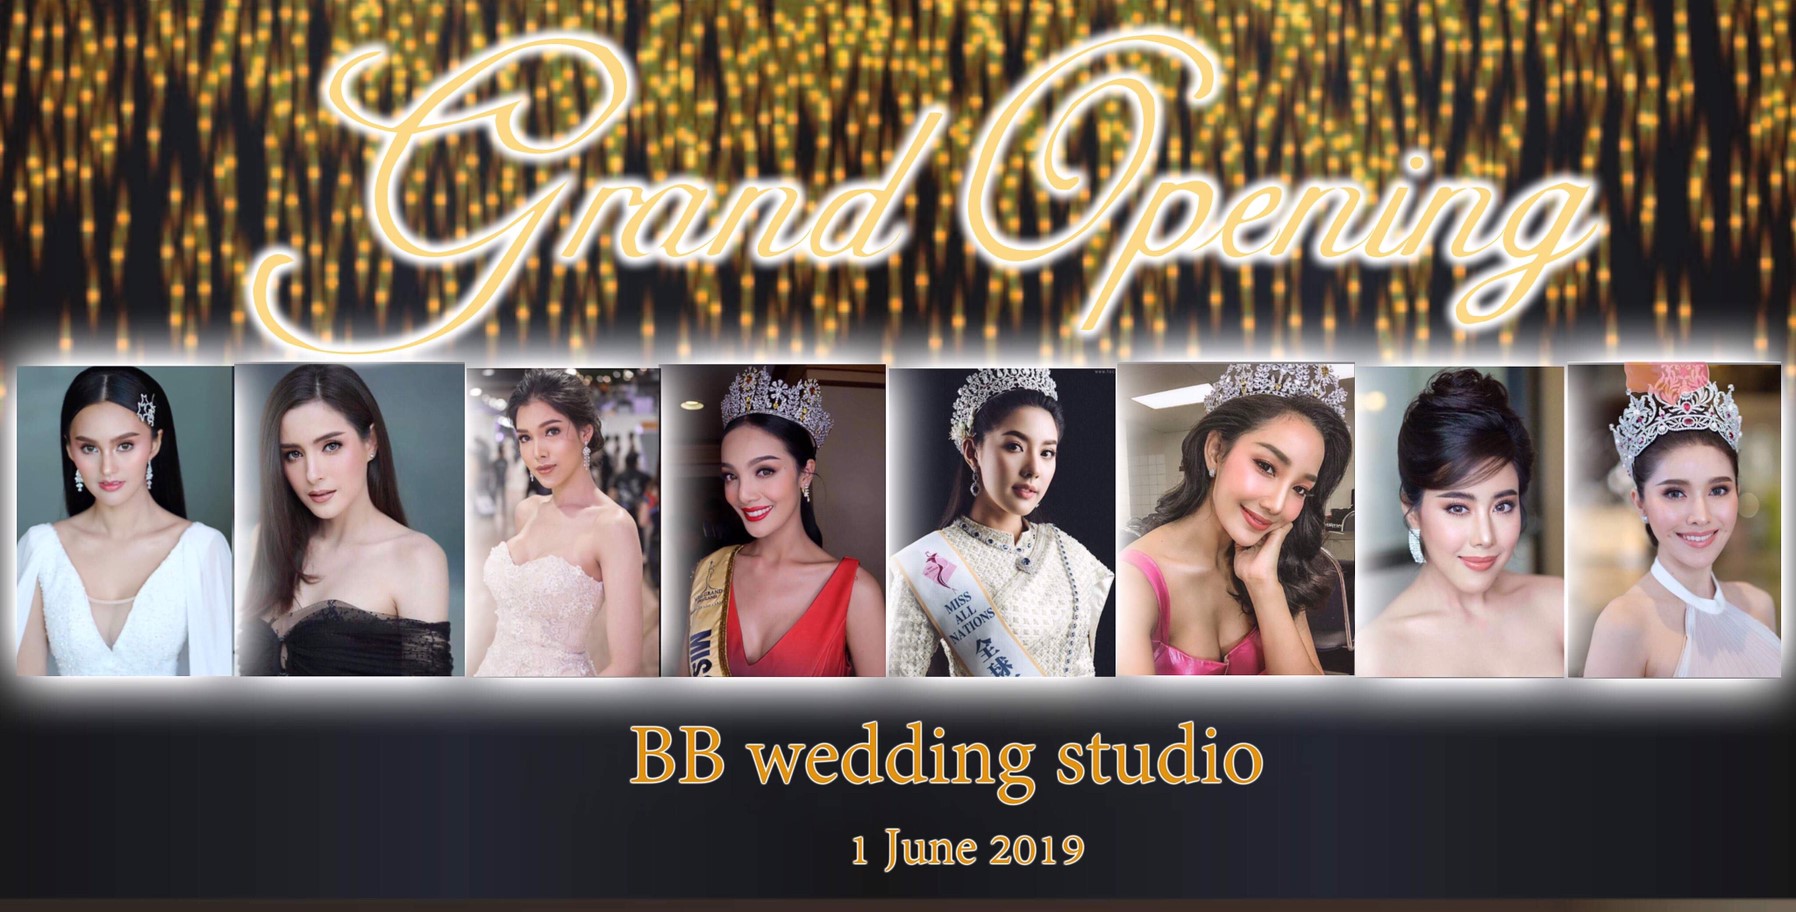 Grand Opening 1 June 2019